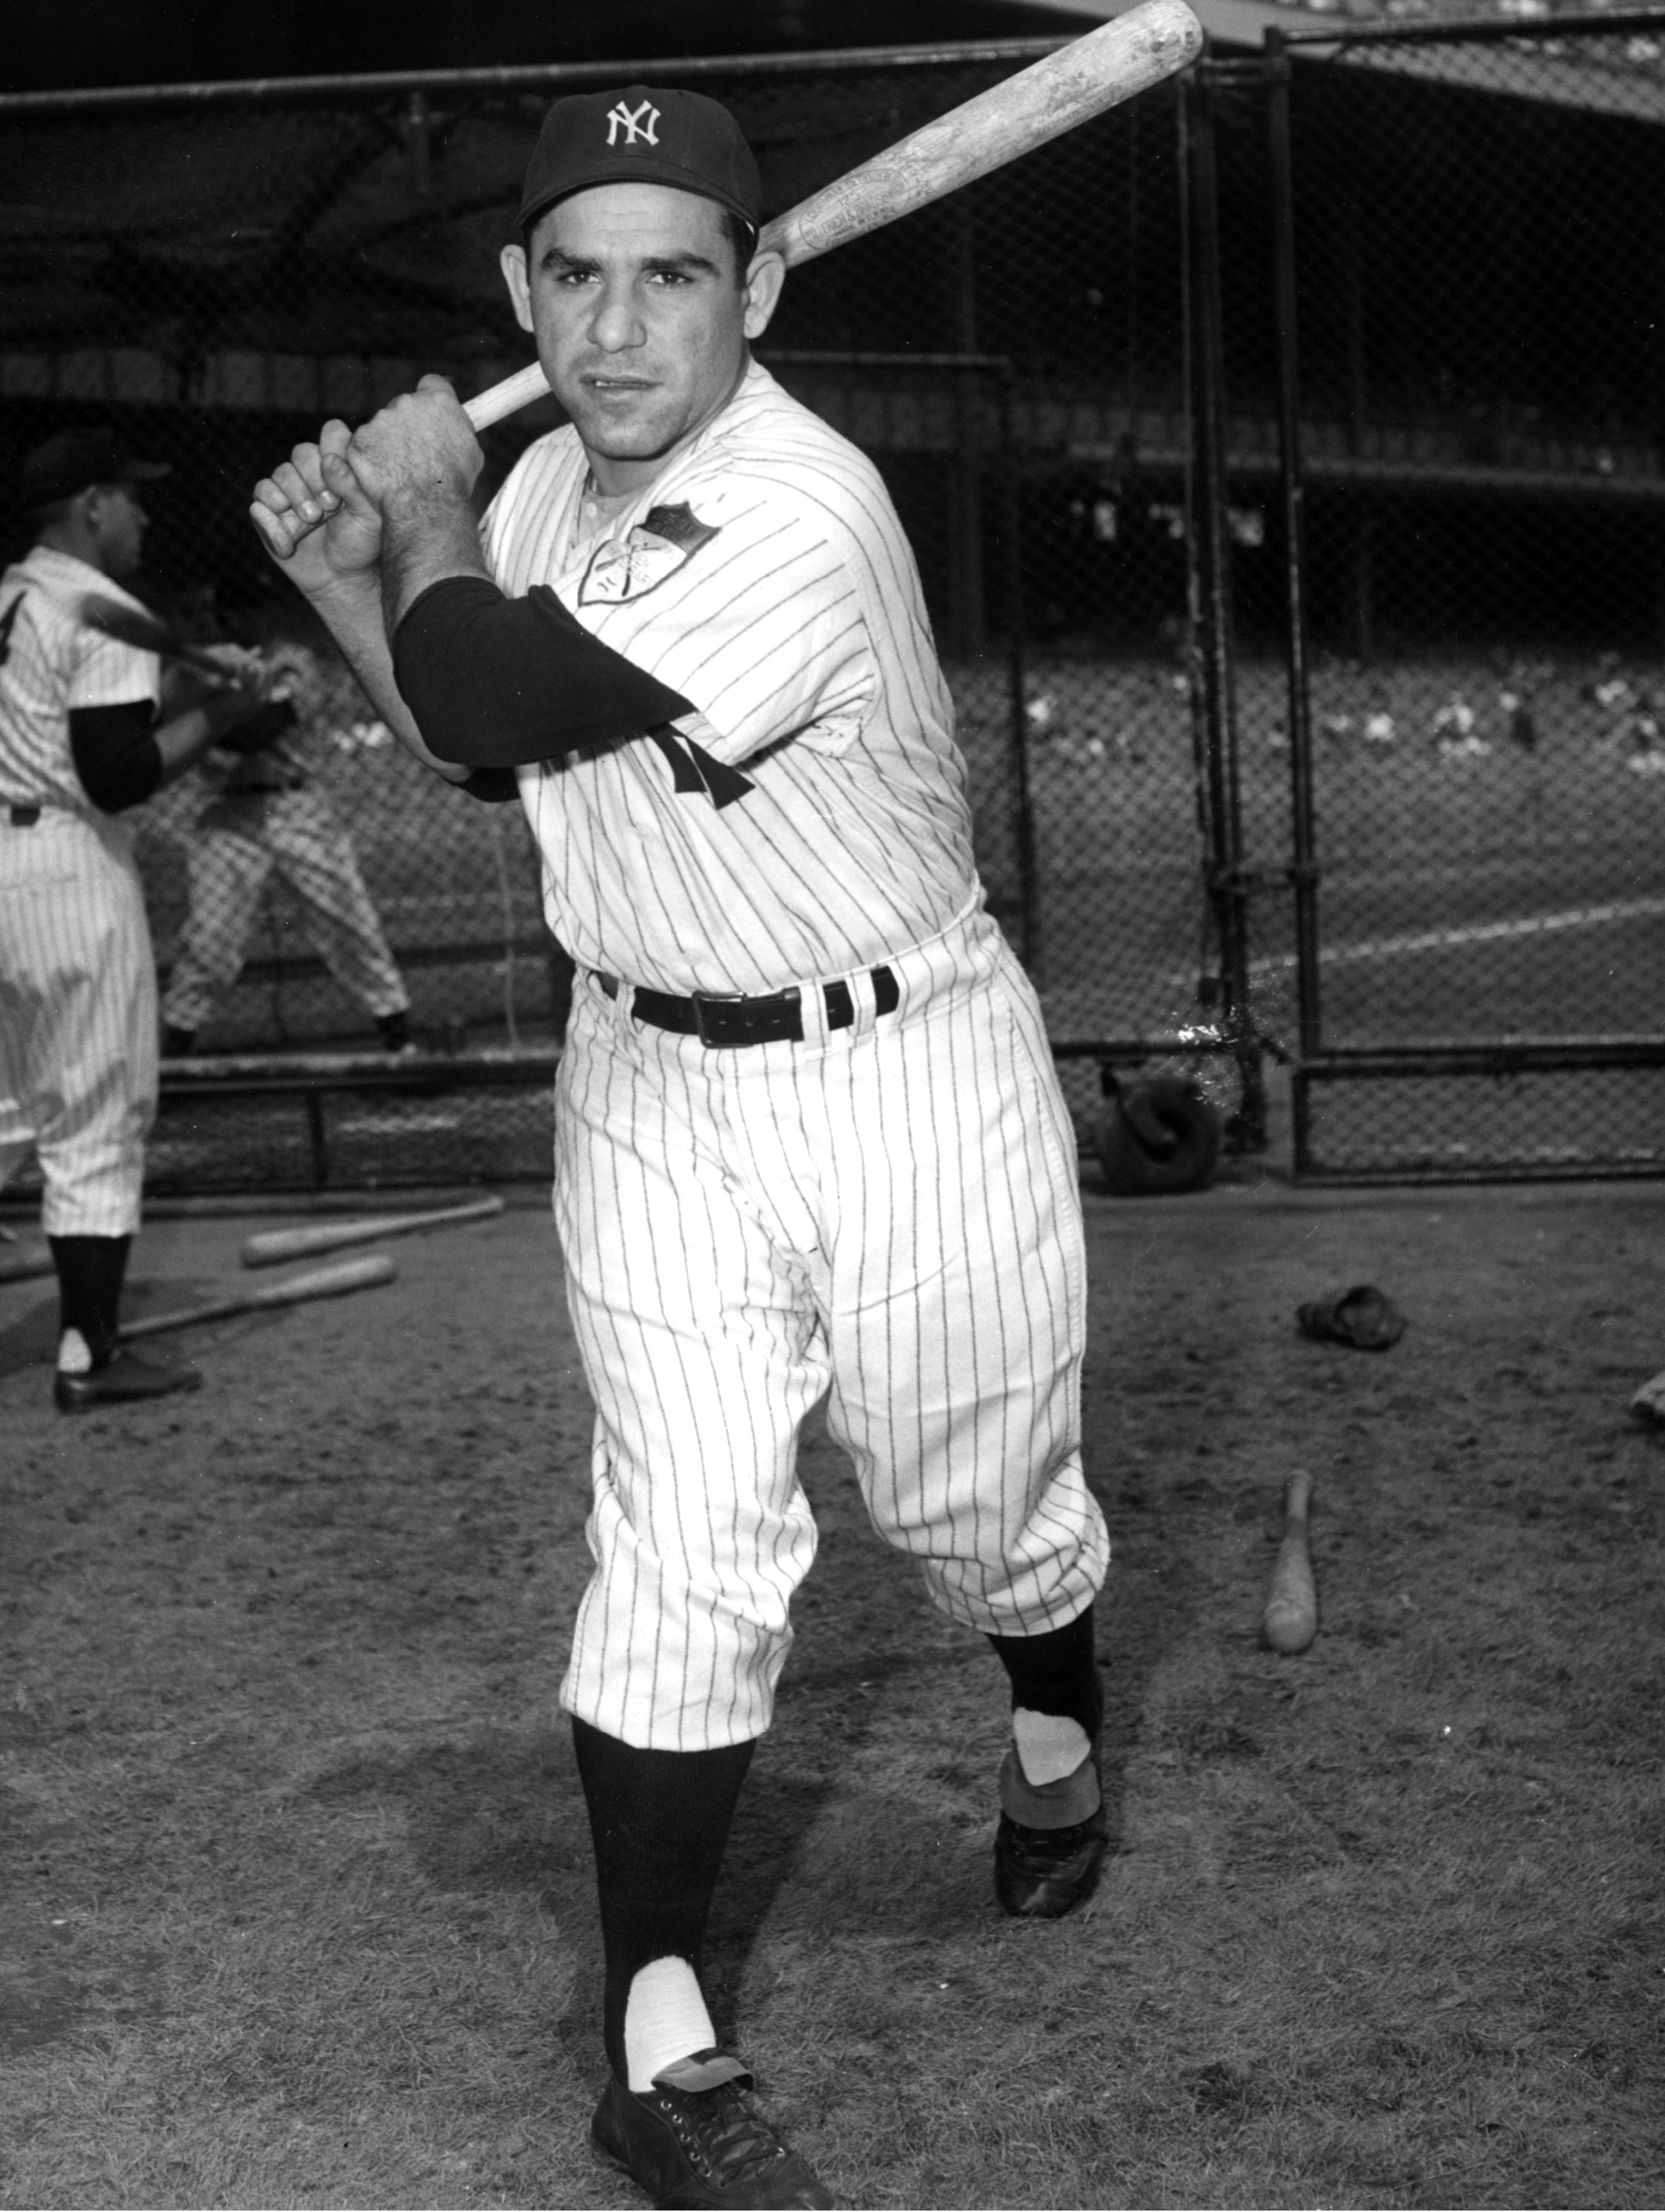 Yogi Berra influenced Astros as bench coach